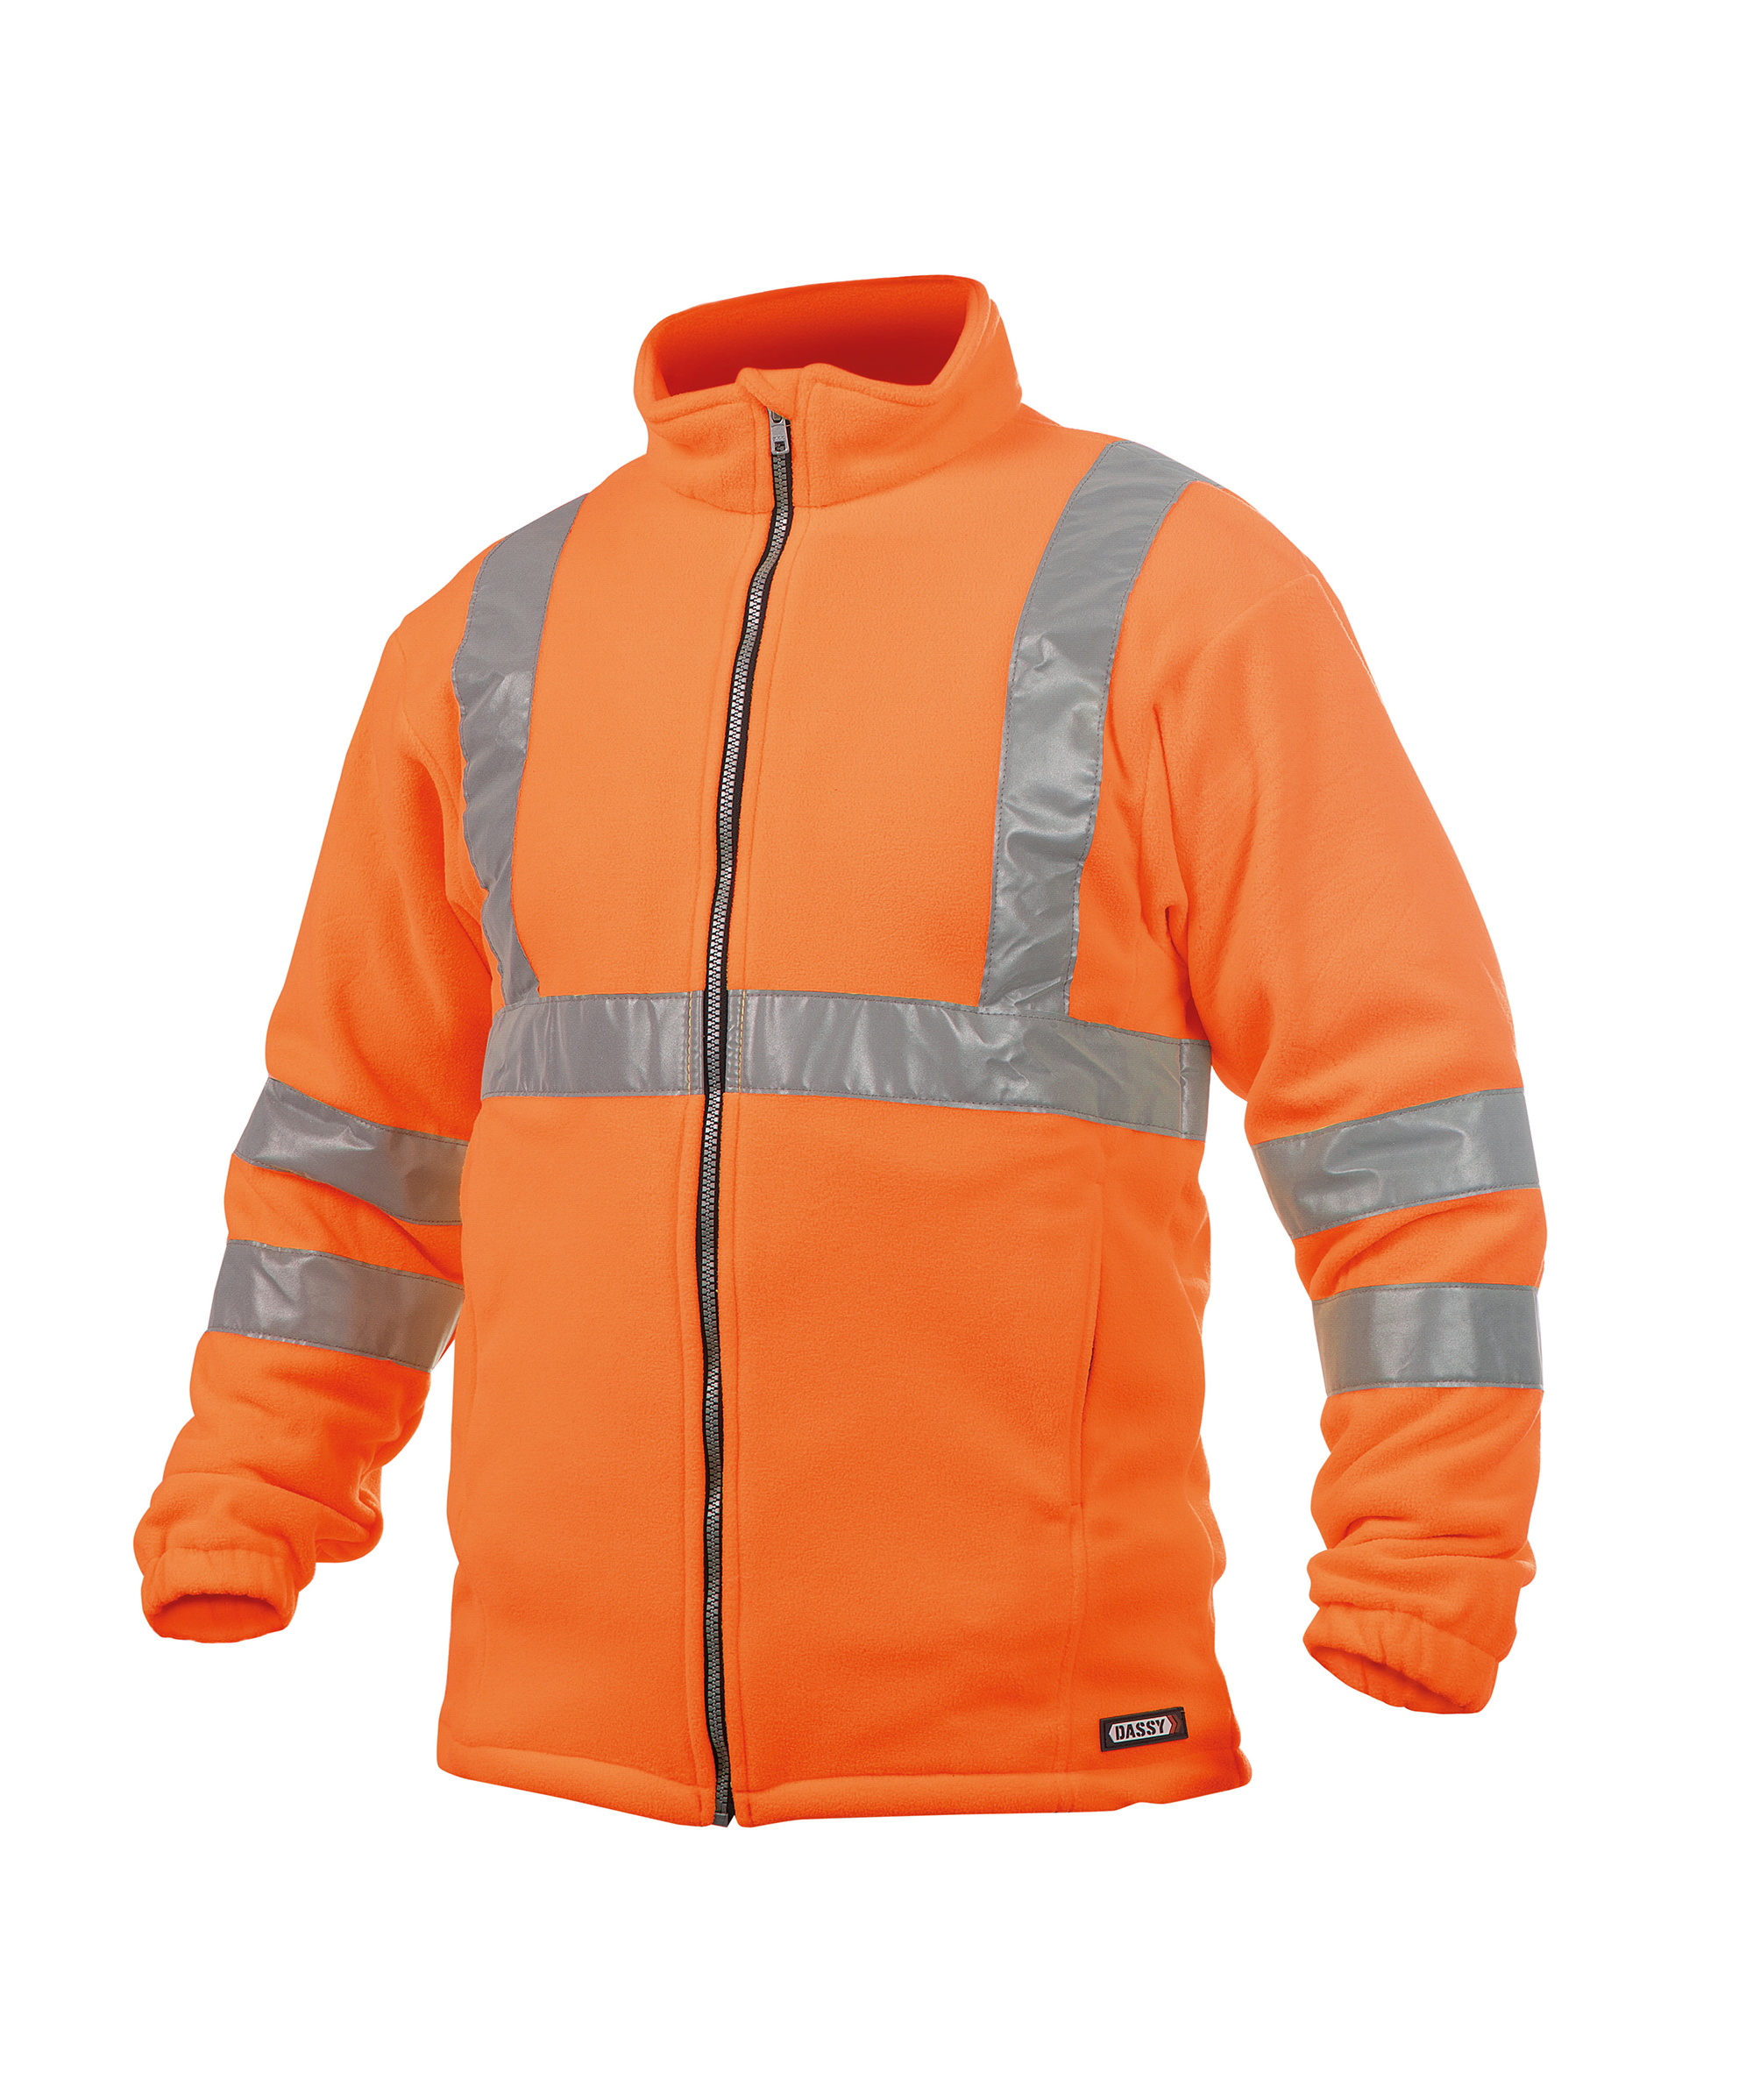 kaluga_high-visibility-fleece-jacket_fluo-orange_front.jpg